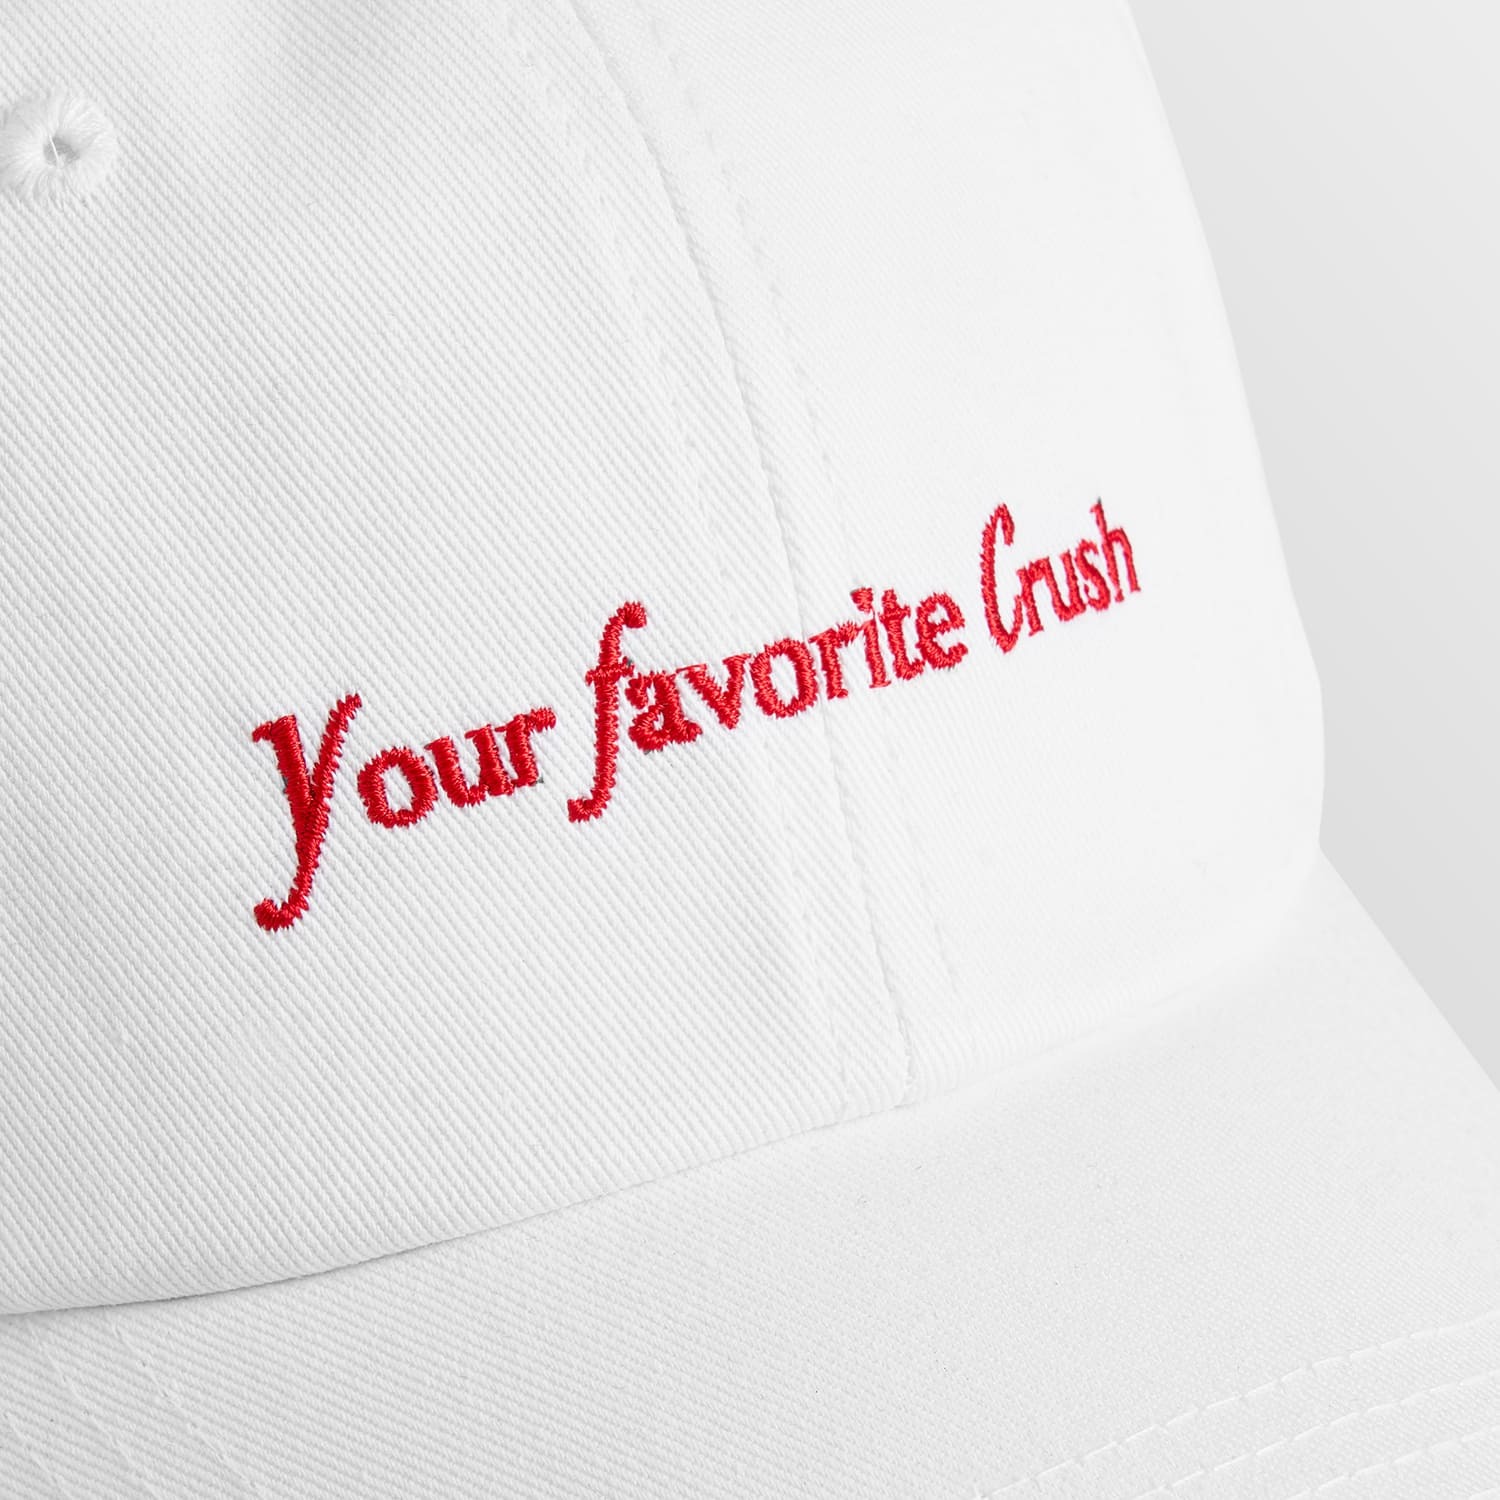 YOUR FAVORITE CRUSH CAP (OFF WHITE)